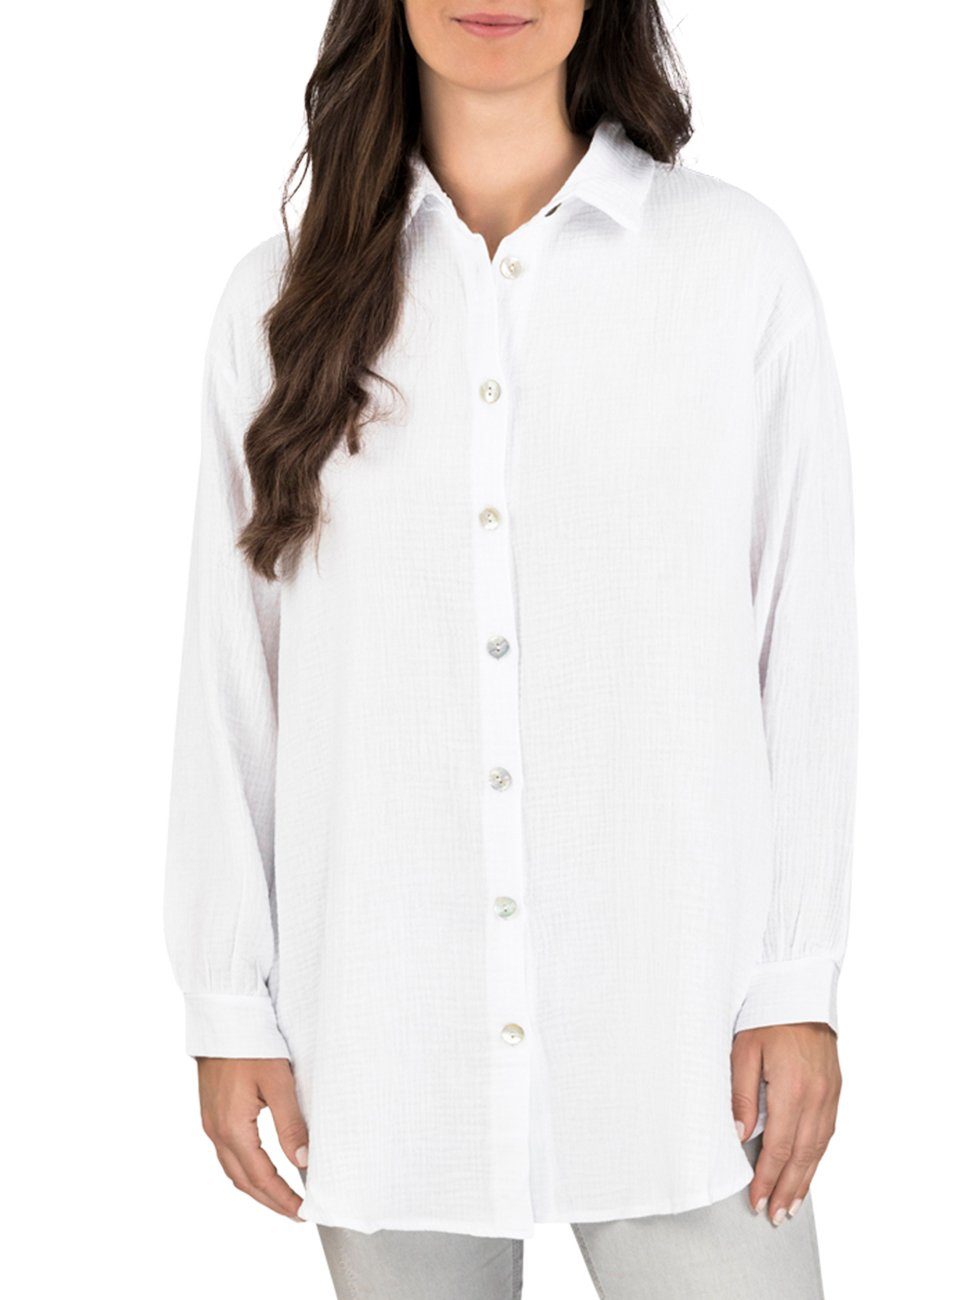 DENIMFY Hemdbluse Damen Bluse DFMathilda Oversize Fit Basic Musselin Hemd aus 100% Baumwolle White (6200)